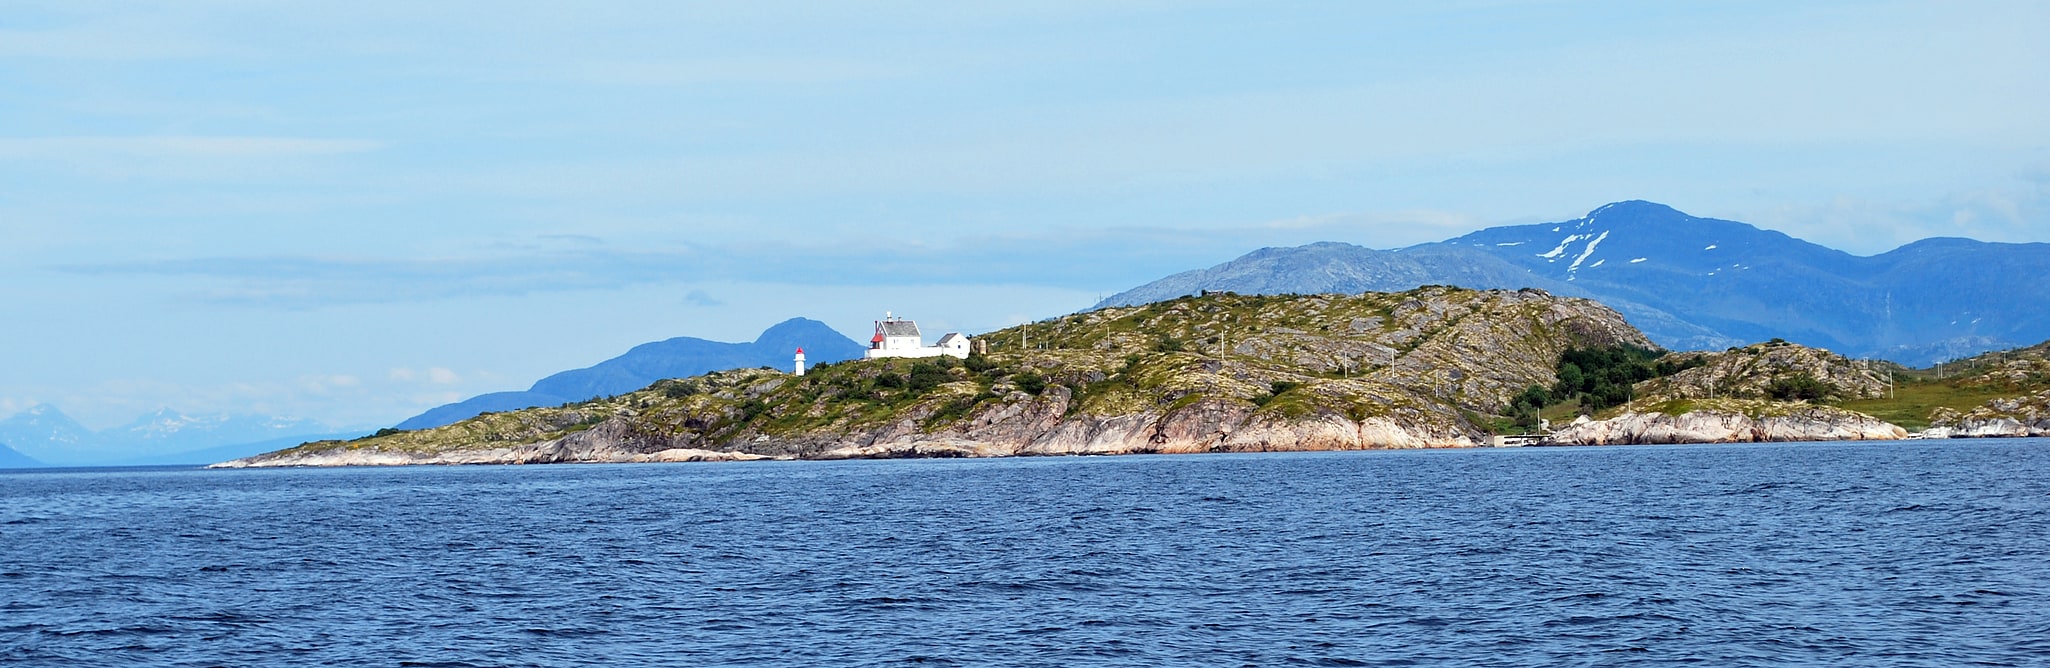 Barøya, Norway